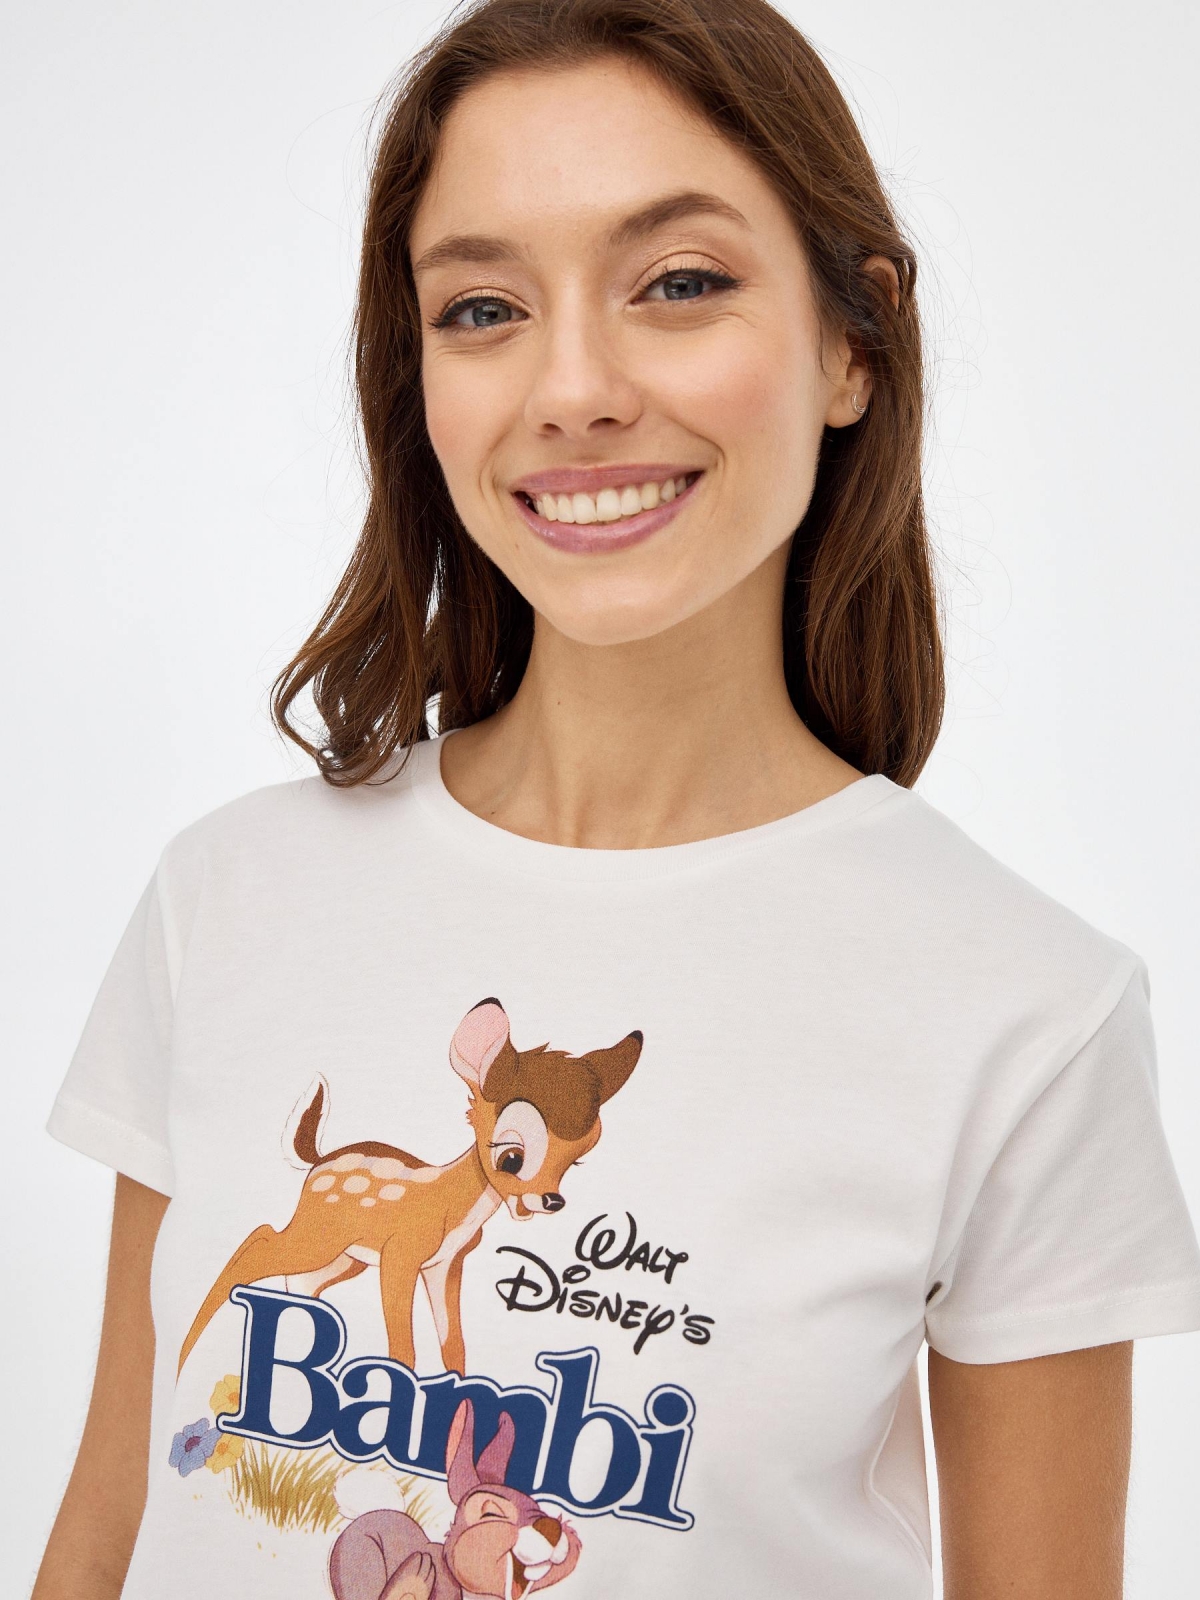  T-shirt Bambi off white primeiro plano